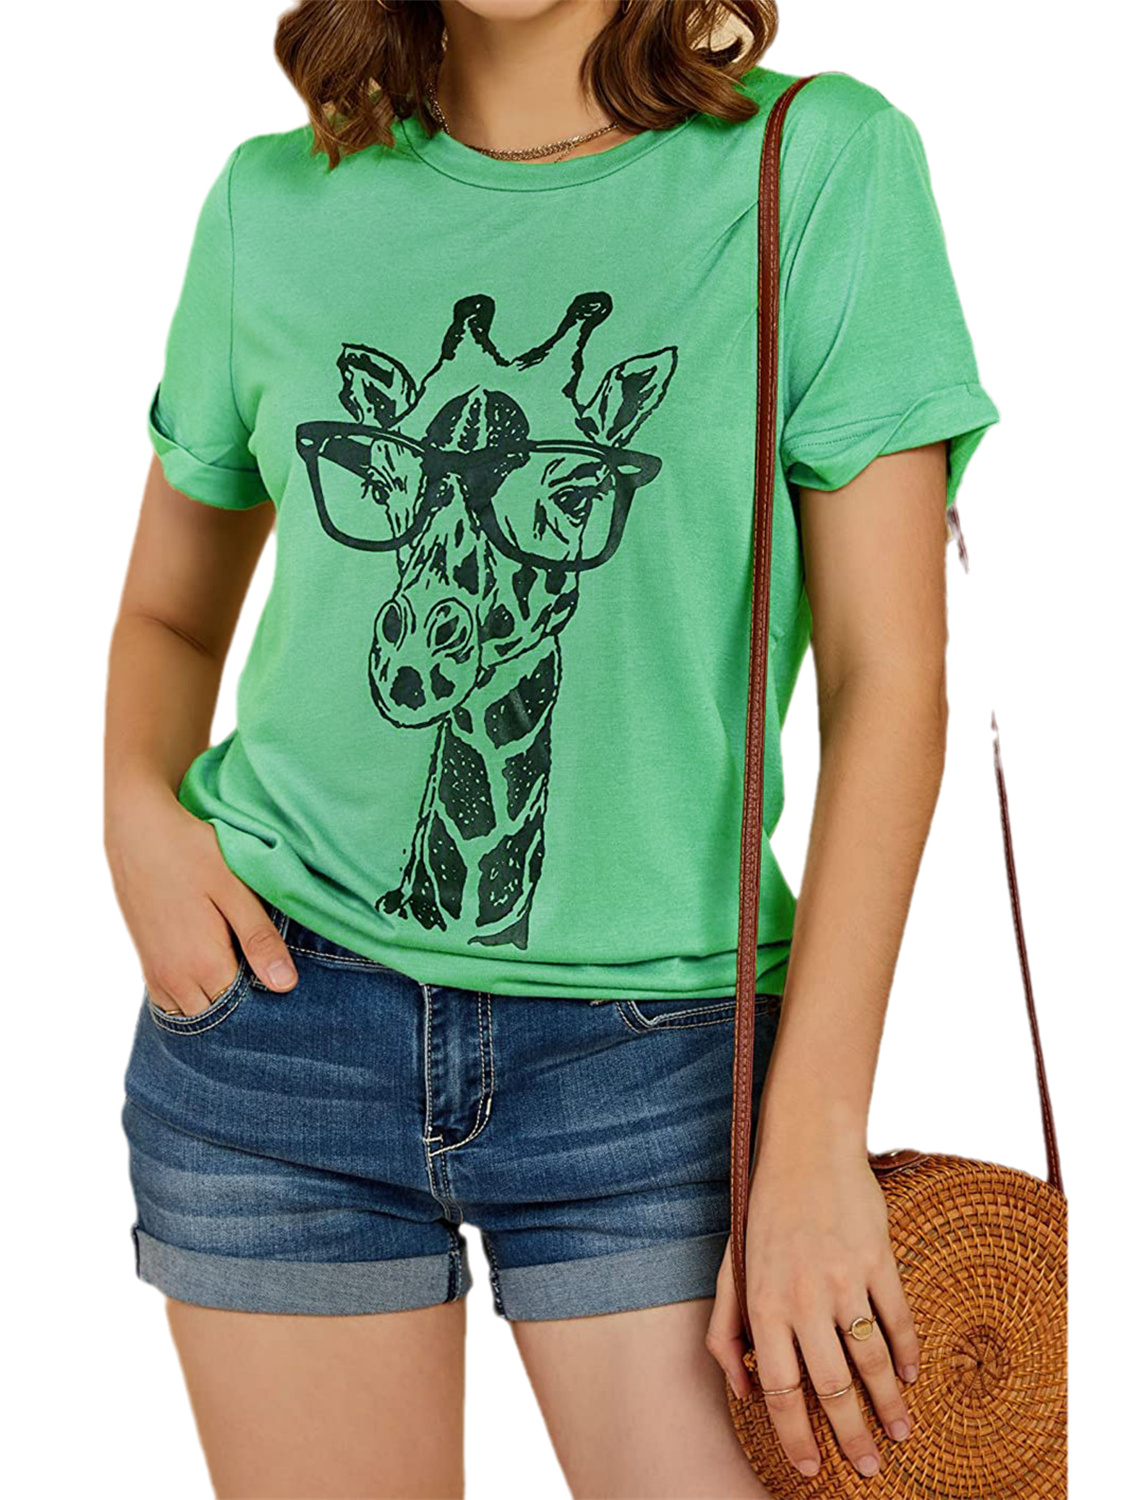 Giraffe Print Graphic Short Sleeve T-Shirt Plus Size Women Tops - image 1 of 5